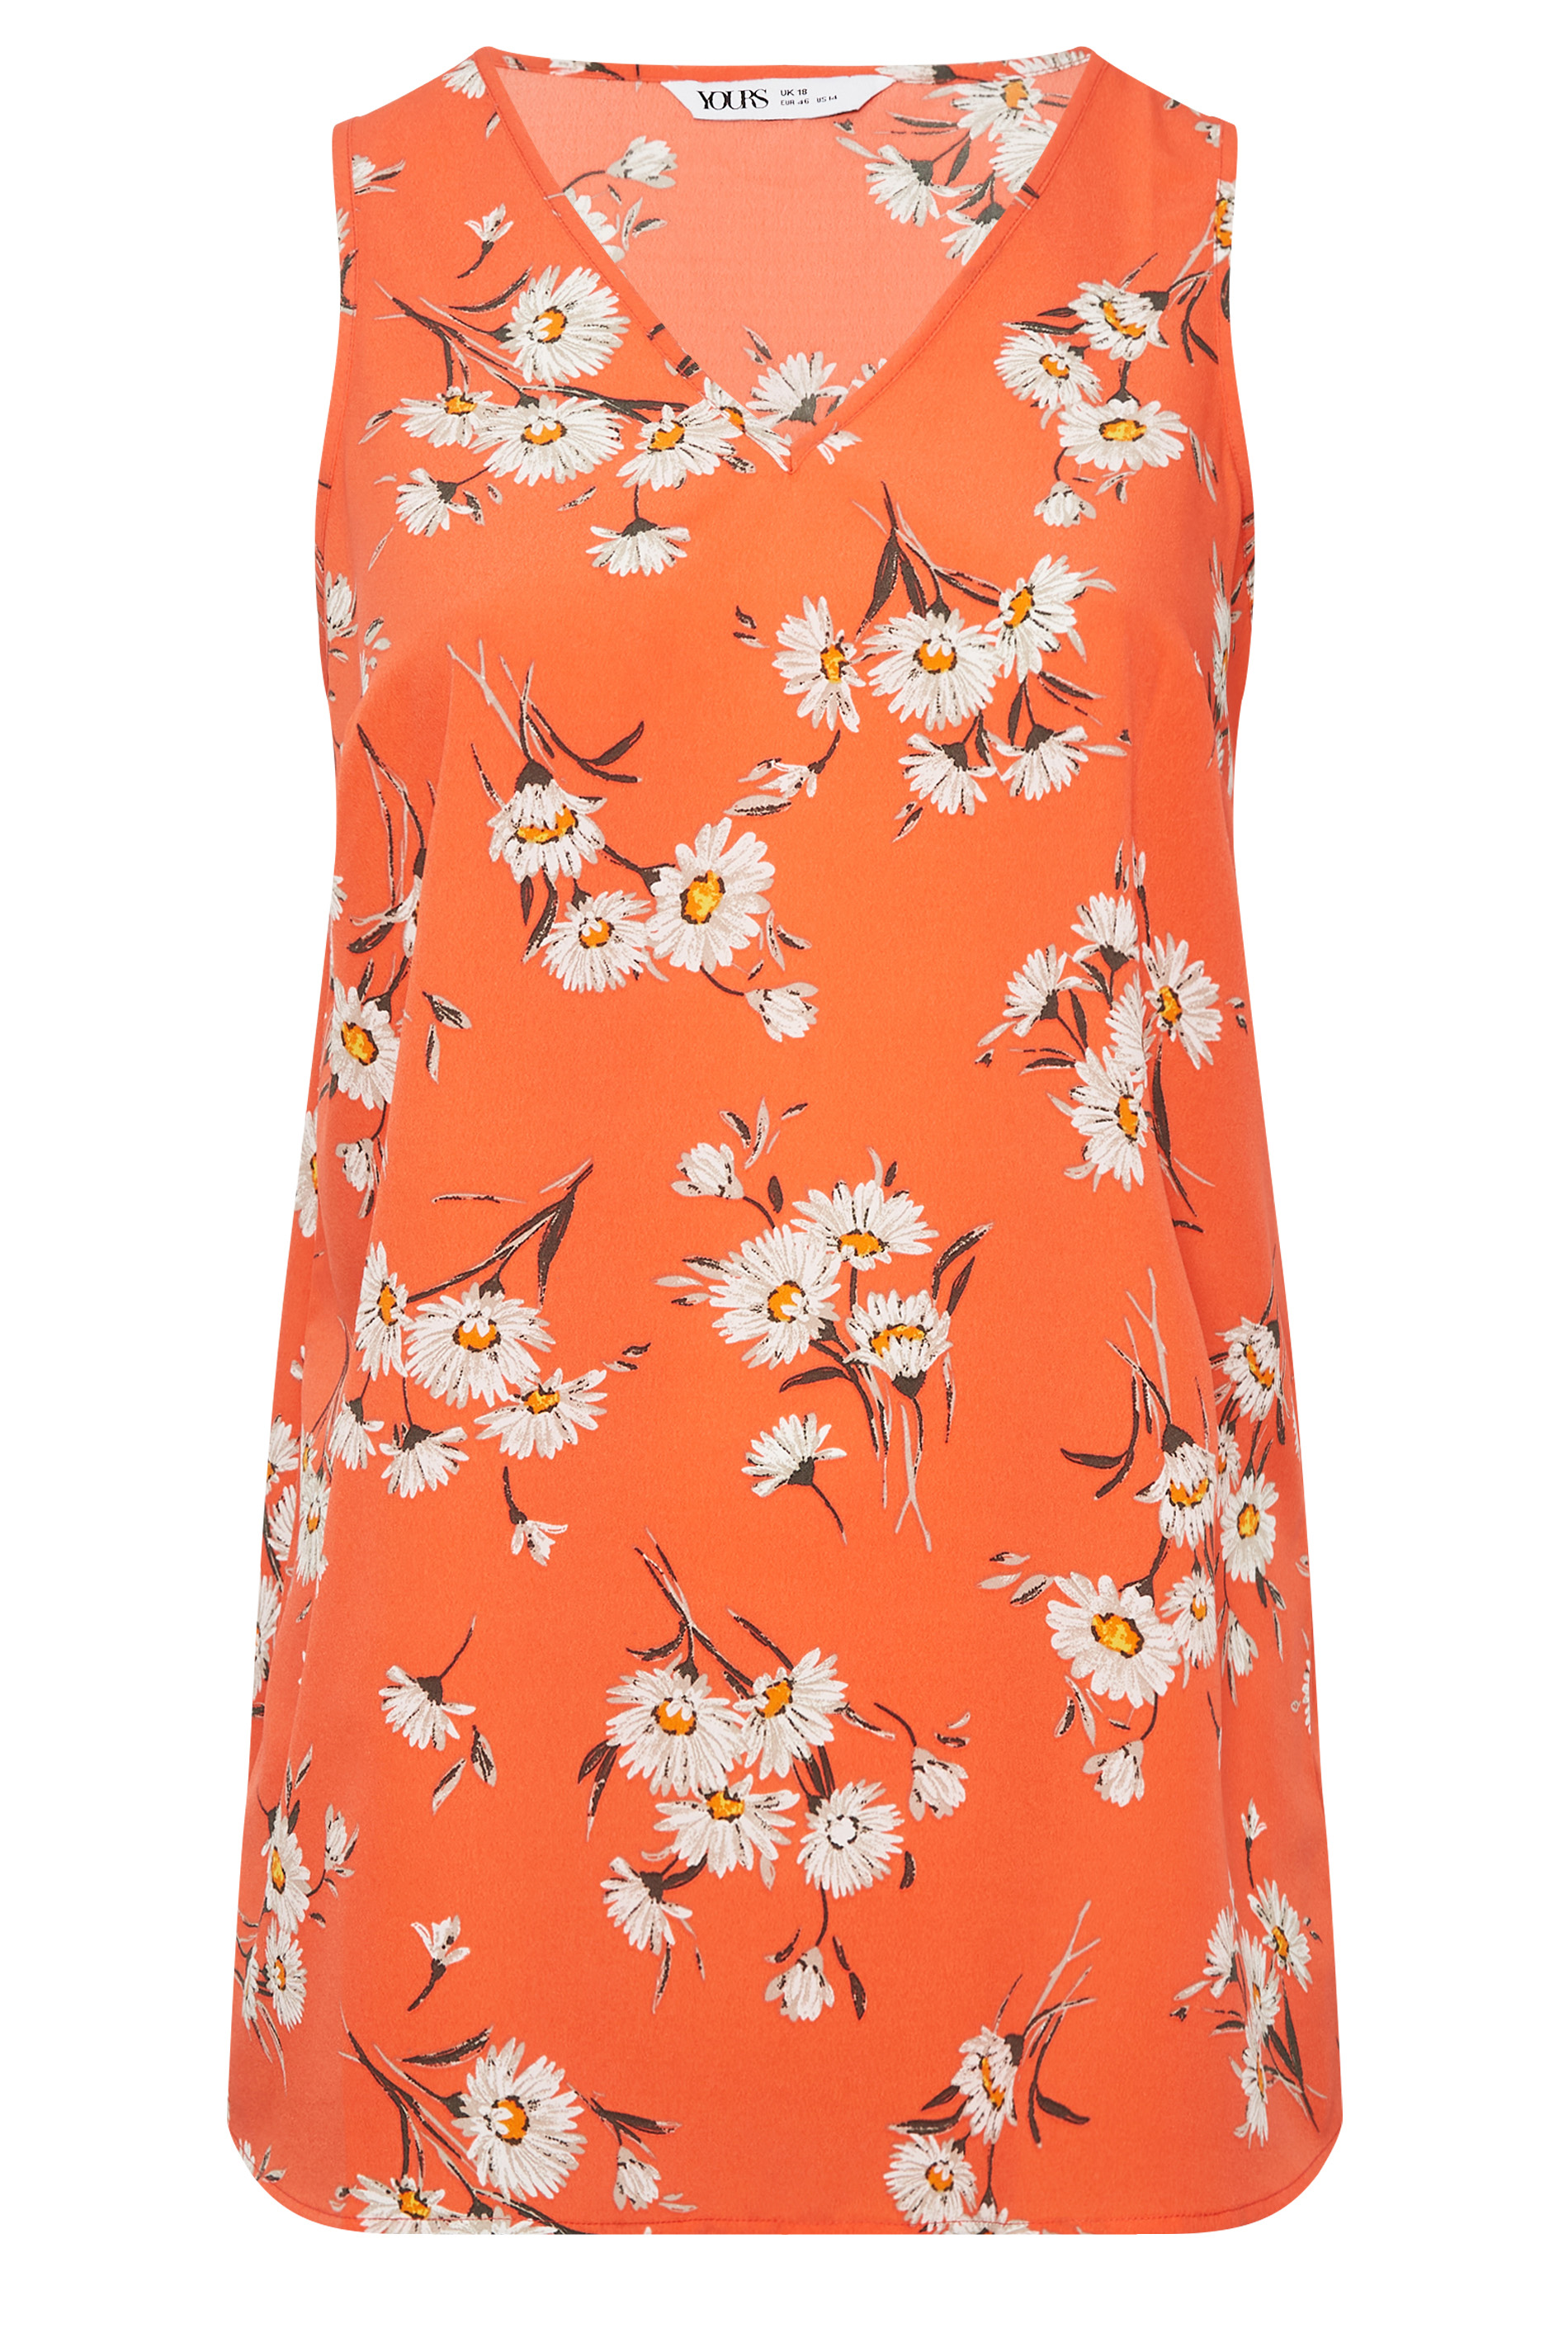 Cheap Summer Sleeveless Plus Size 5XL Floral Vest Camisole Halter